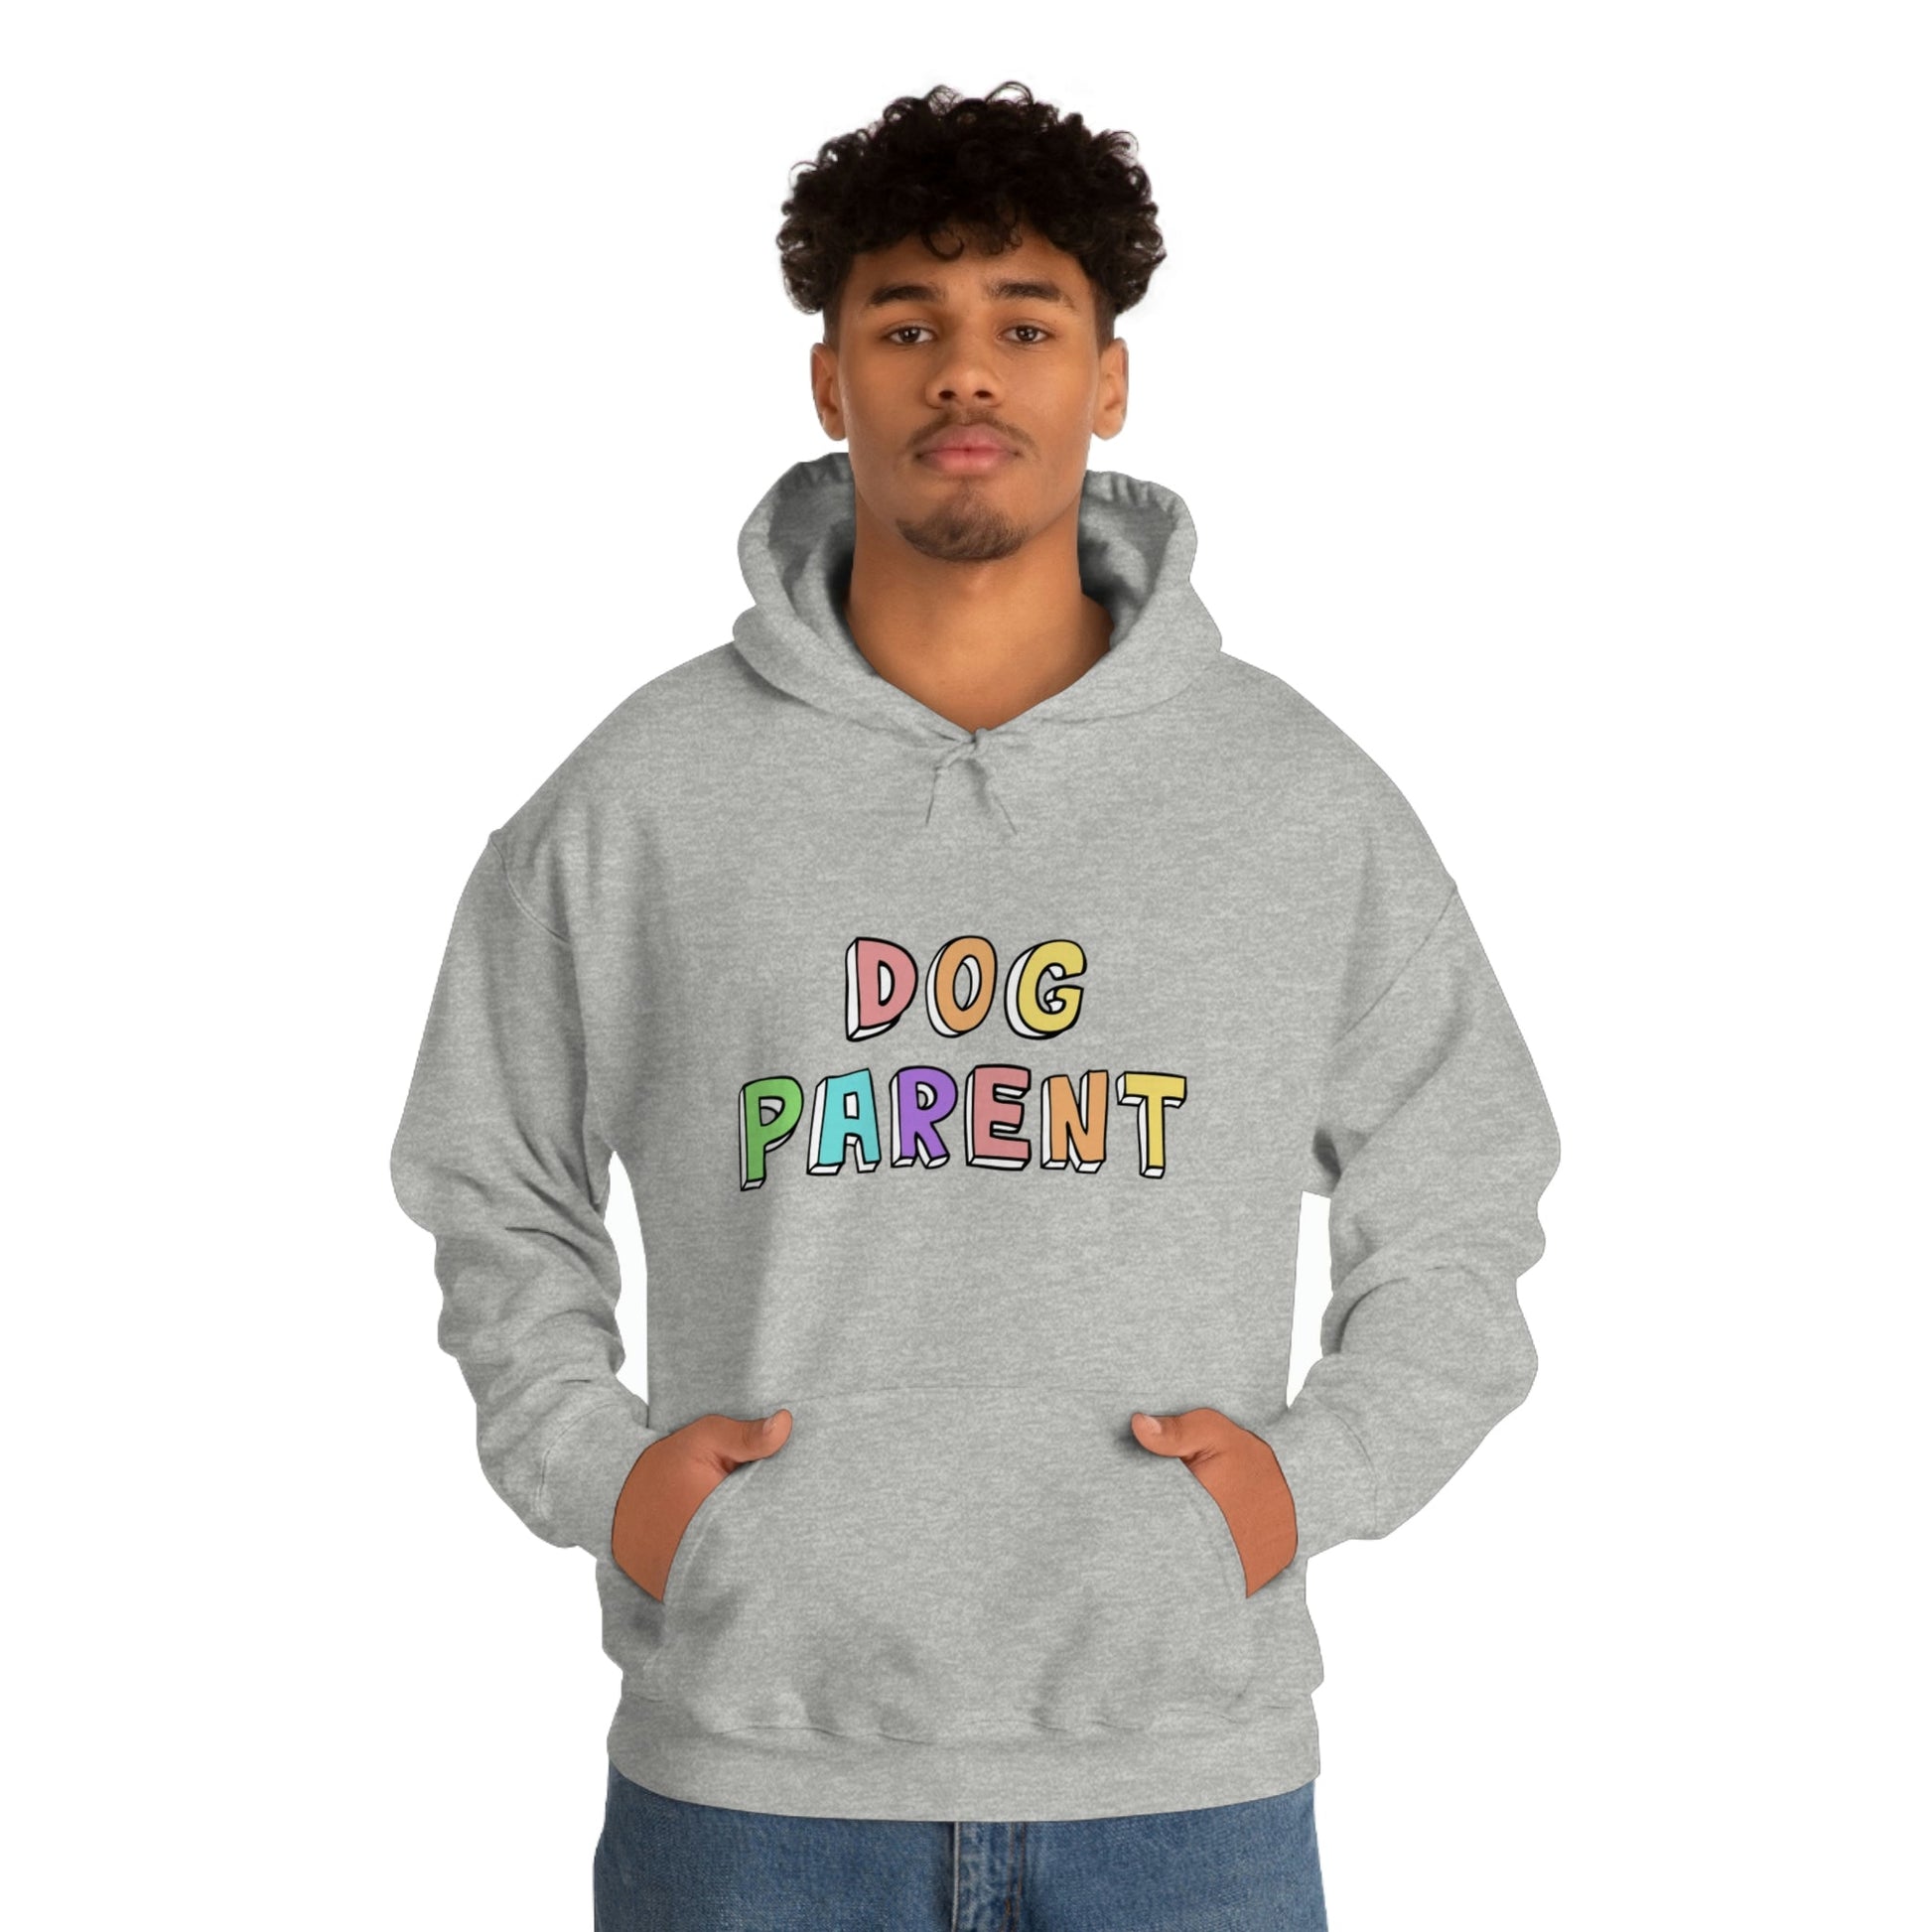 Dog Parent | Hooded Sweatshirt - Detezi Designs-27207390936252009144